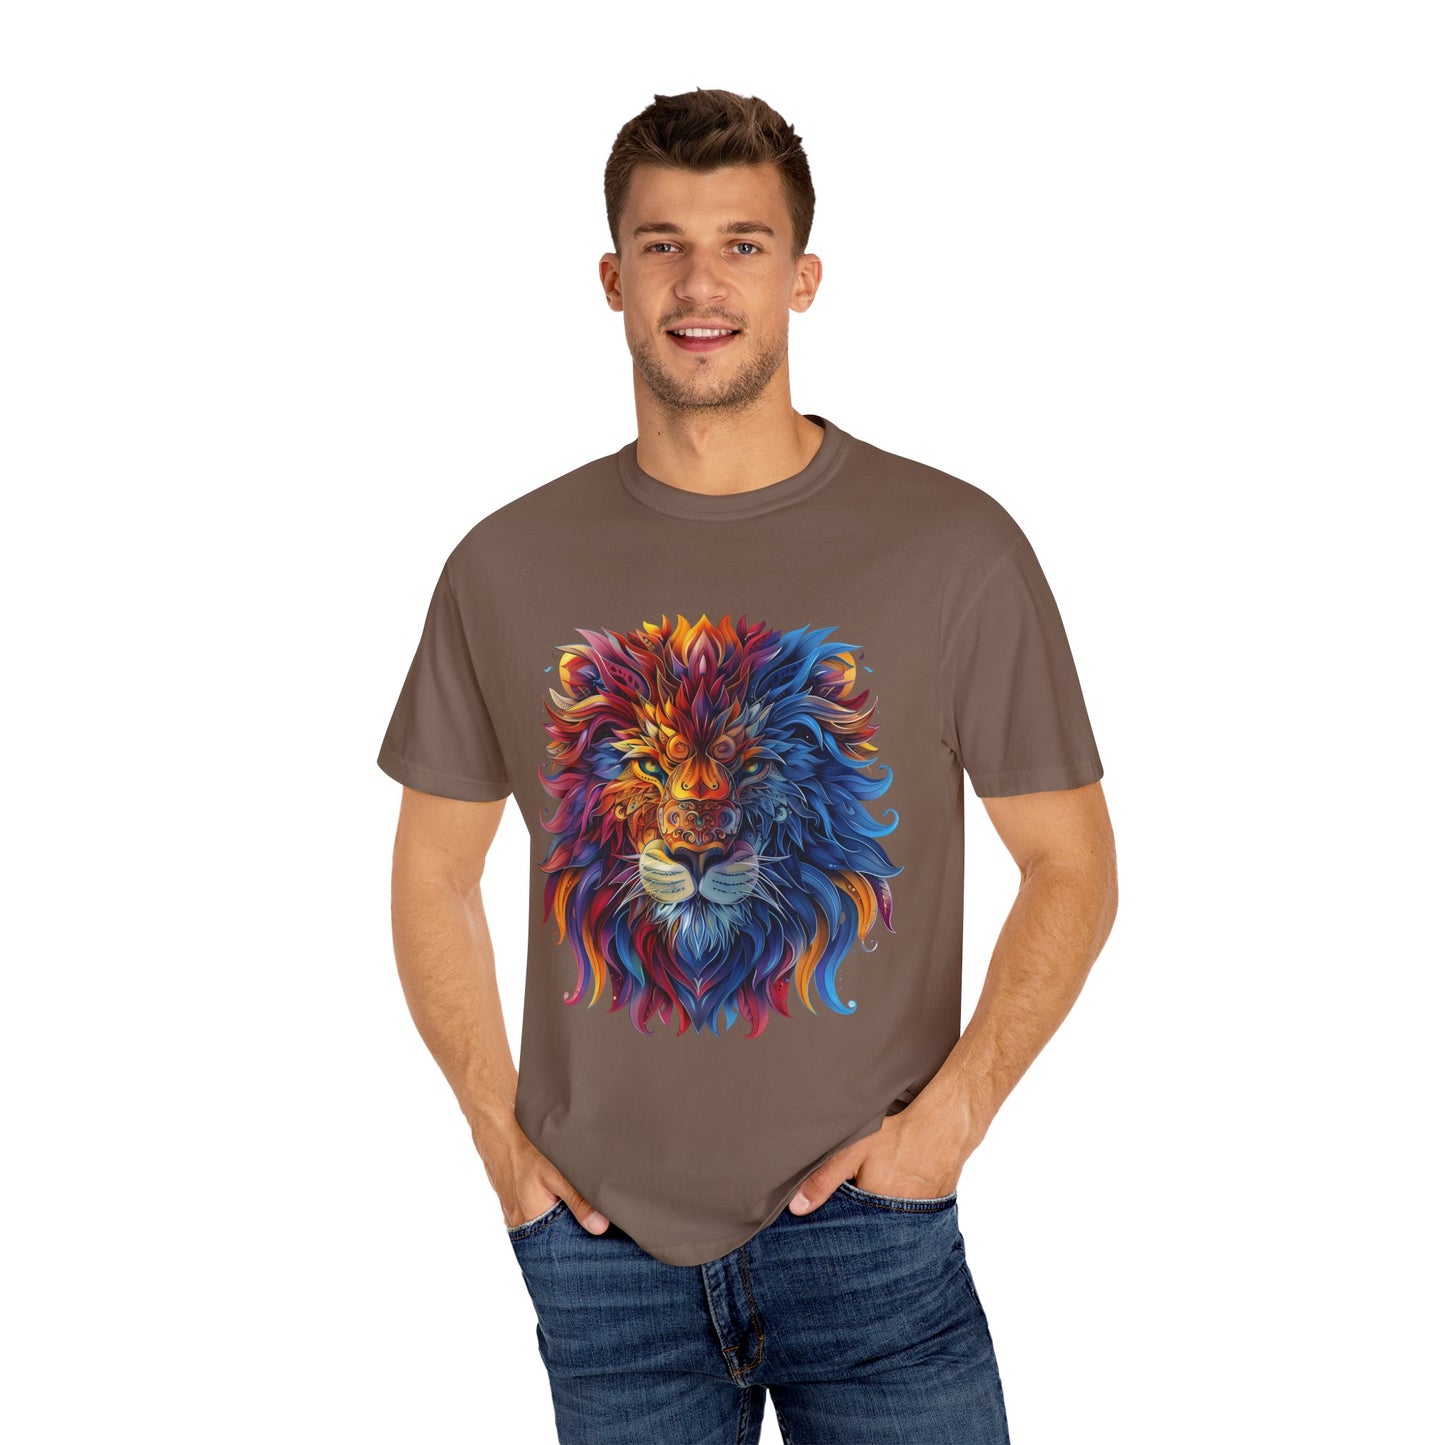 Lion Head Cool Graphic Design Novelty Unisex Garment-dyed T-shirt Cotton Funny Humorous Graphic Soft Premium Unisex Men Women Espresso T-shirt Birthday Gift-60